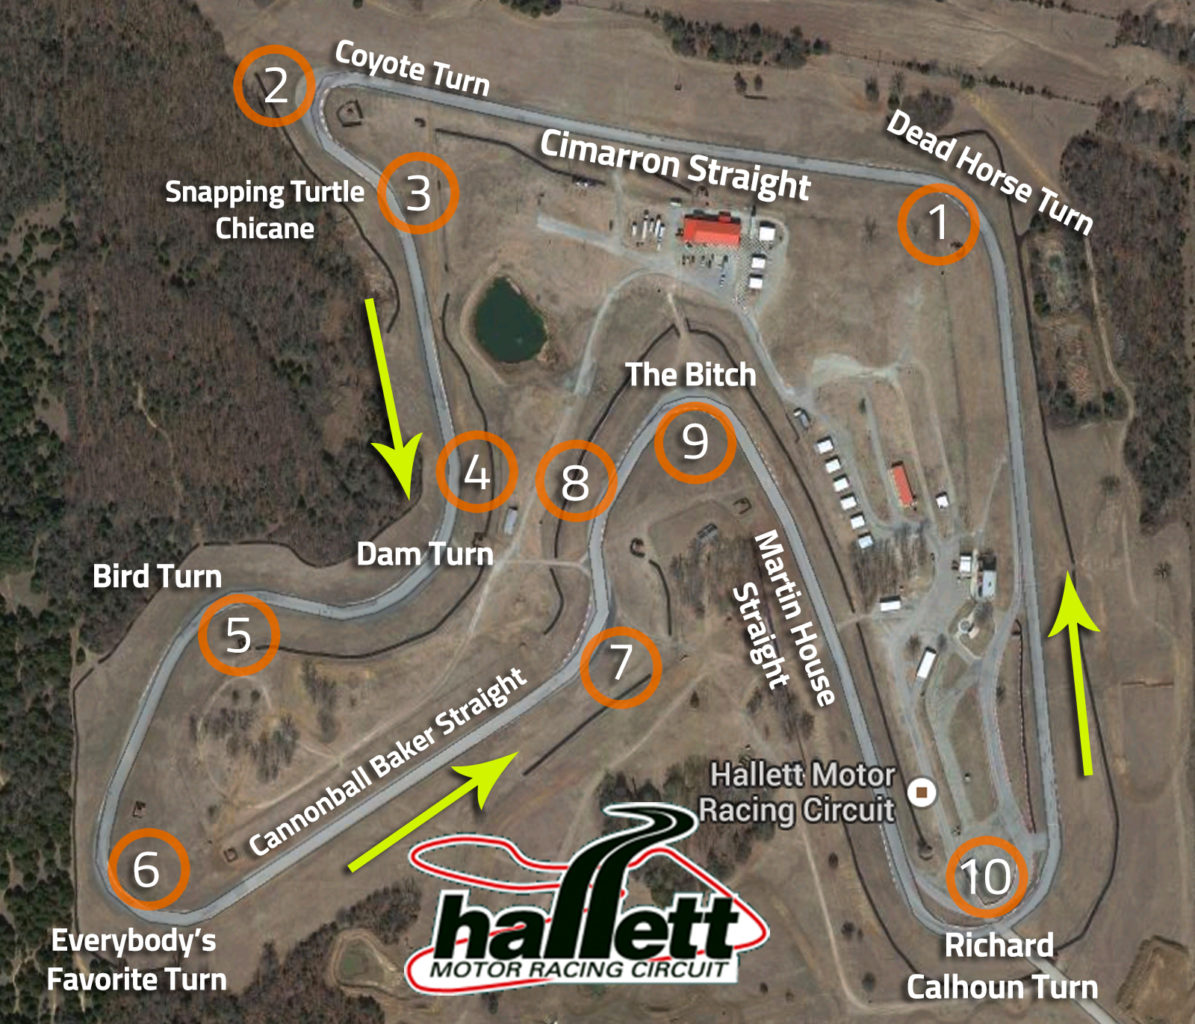 hallett motor racing circuit track map labeled 